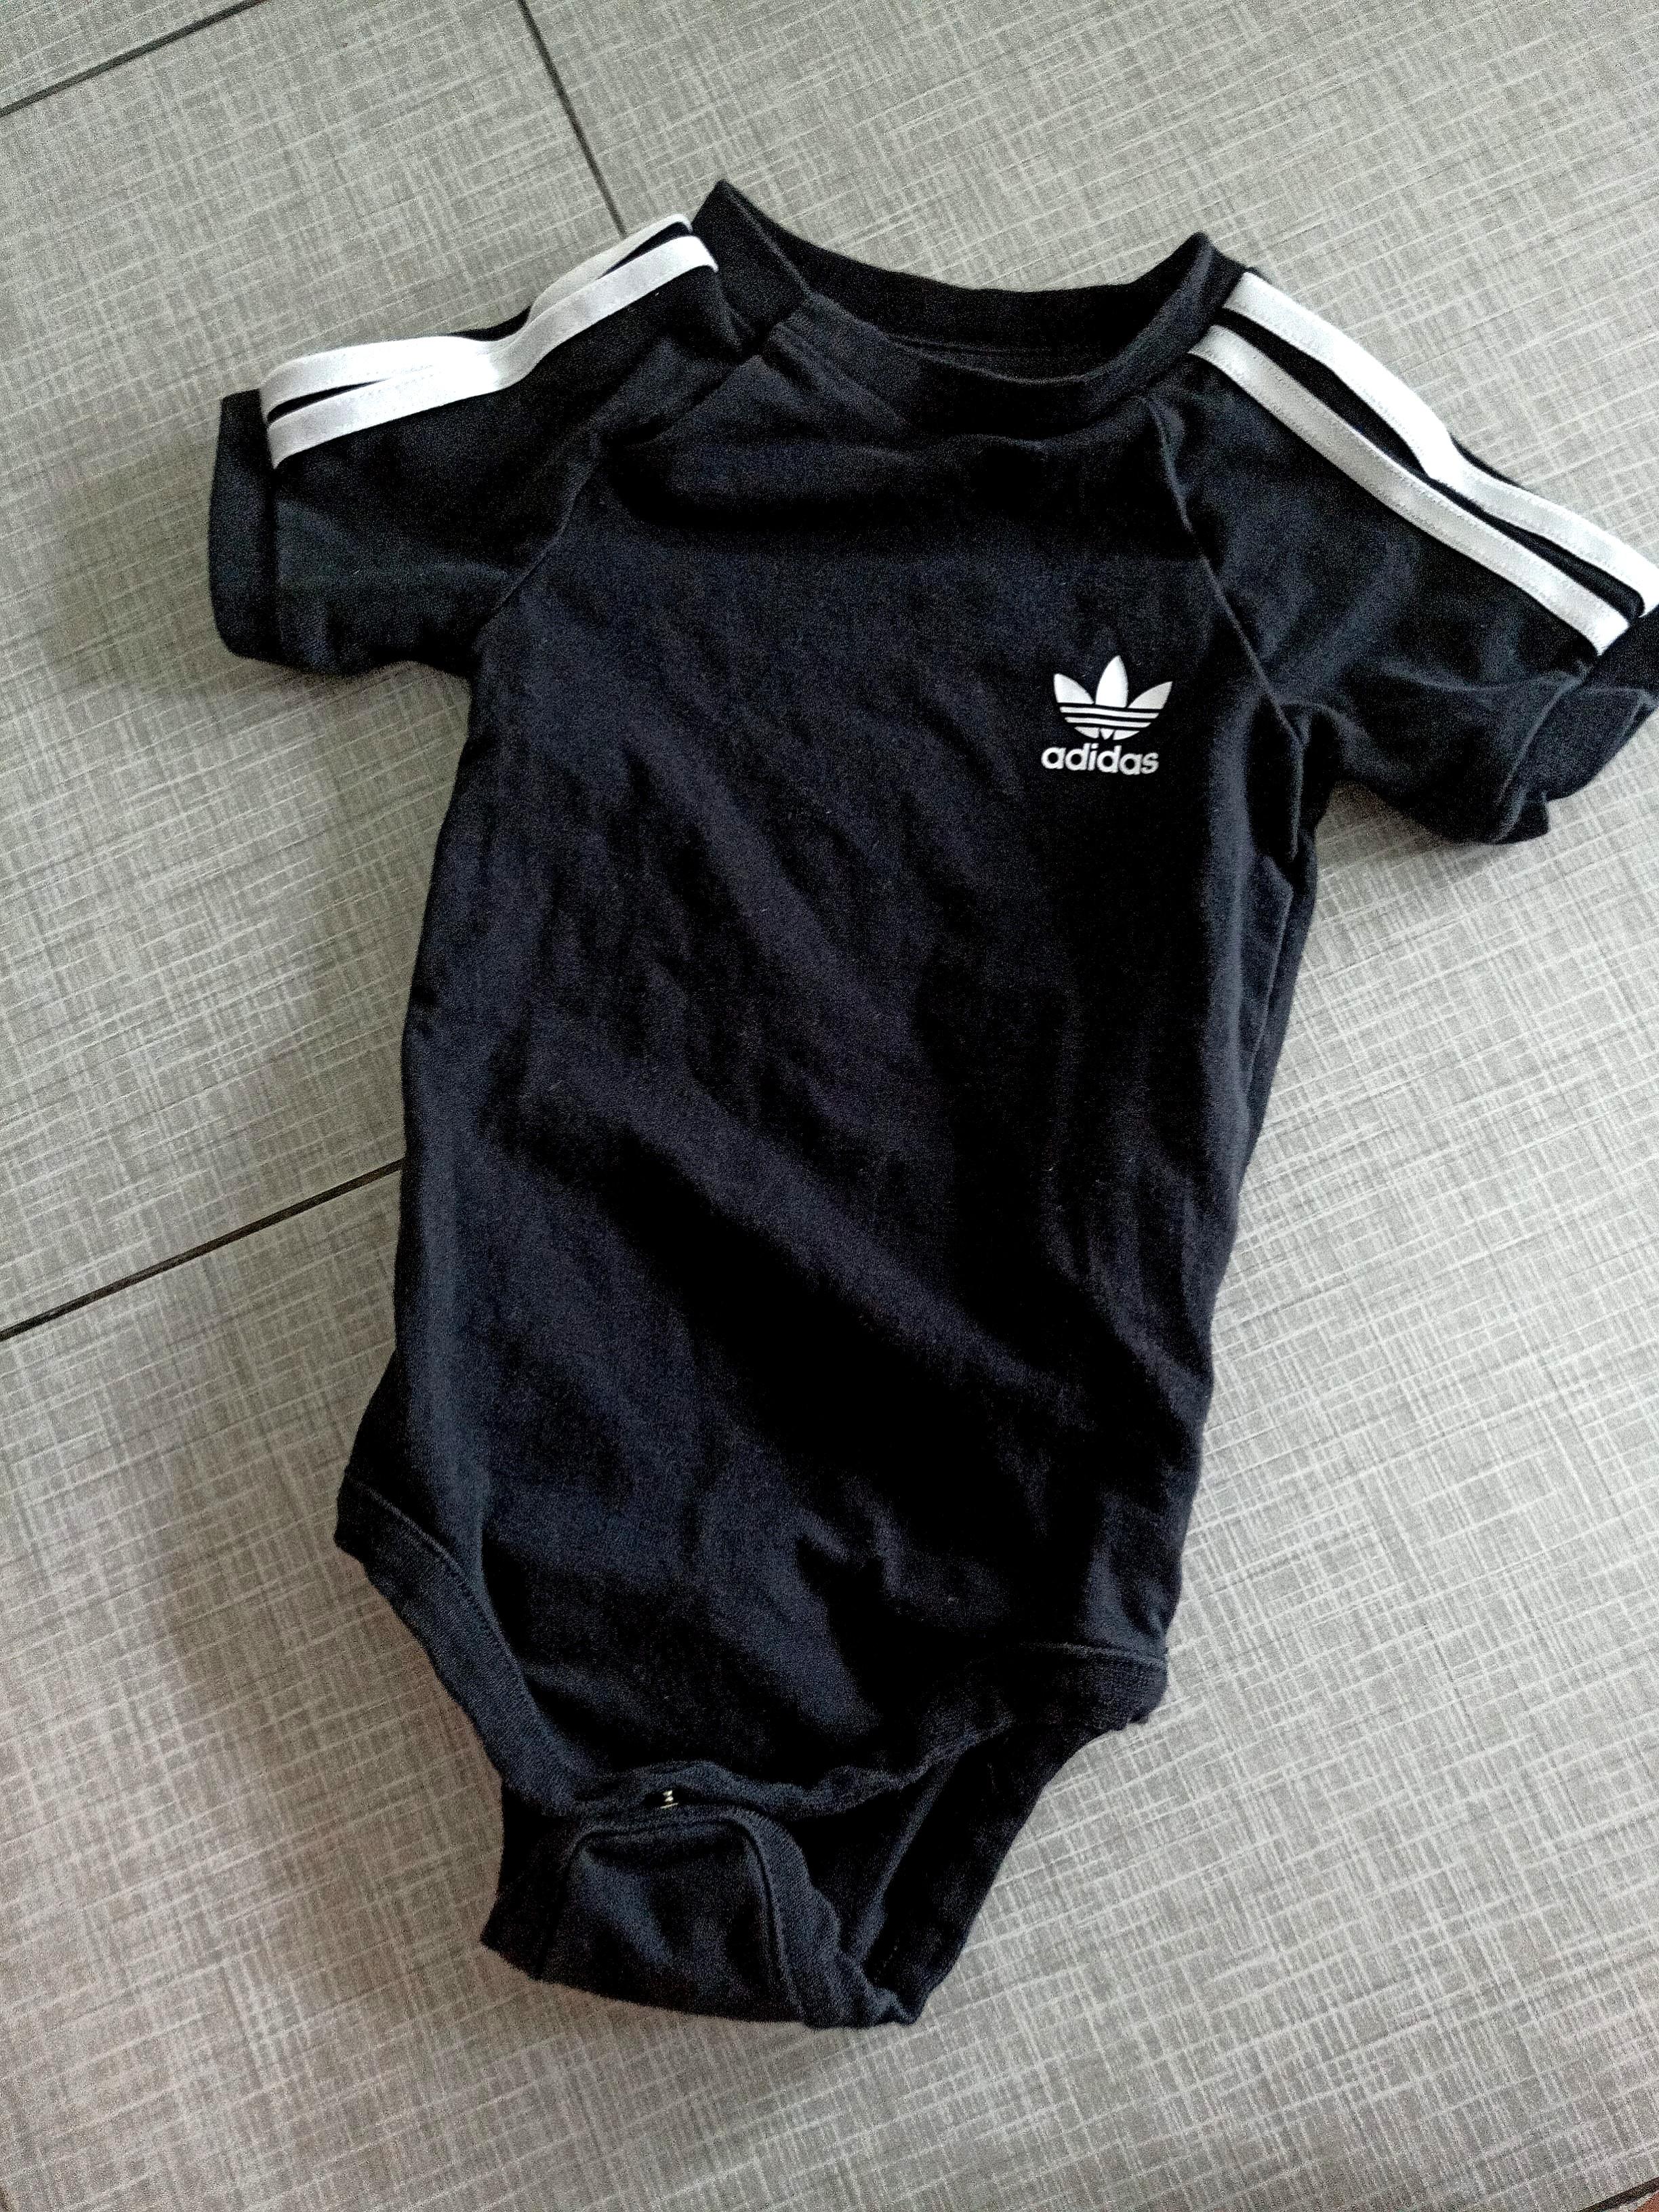 baby adidas jumpsuit